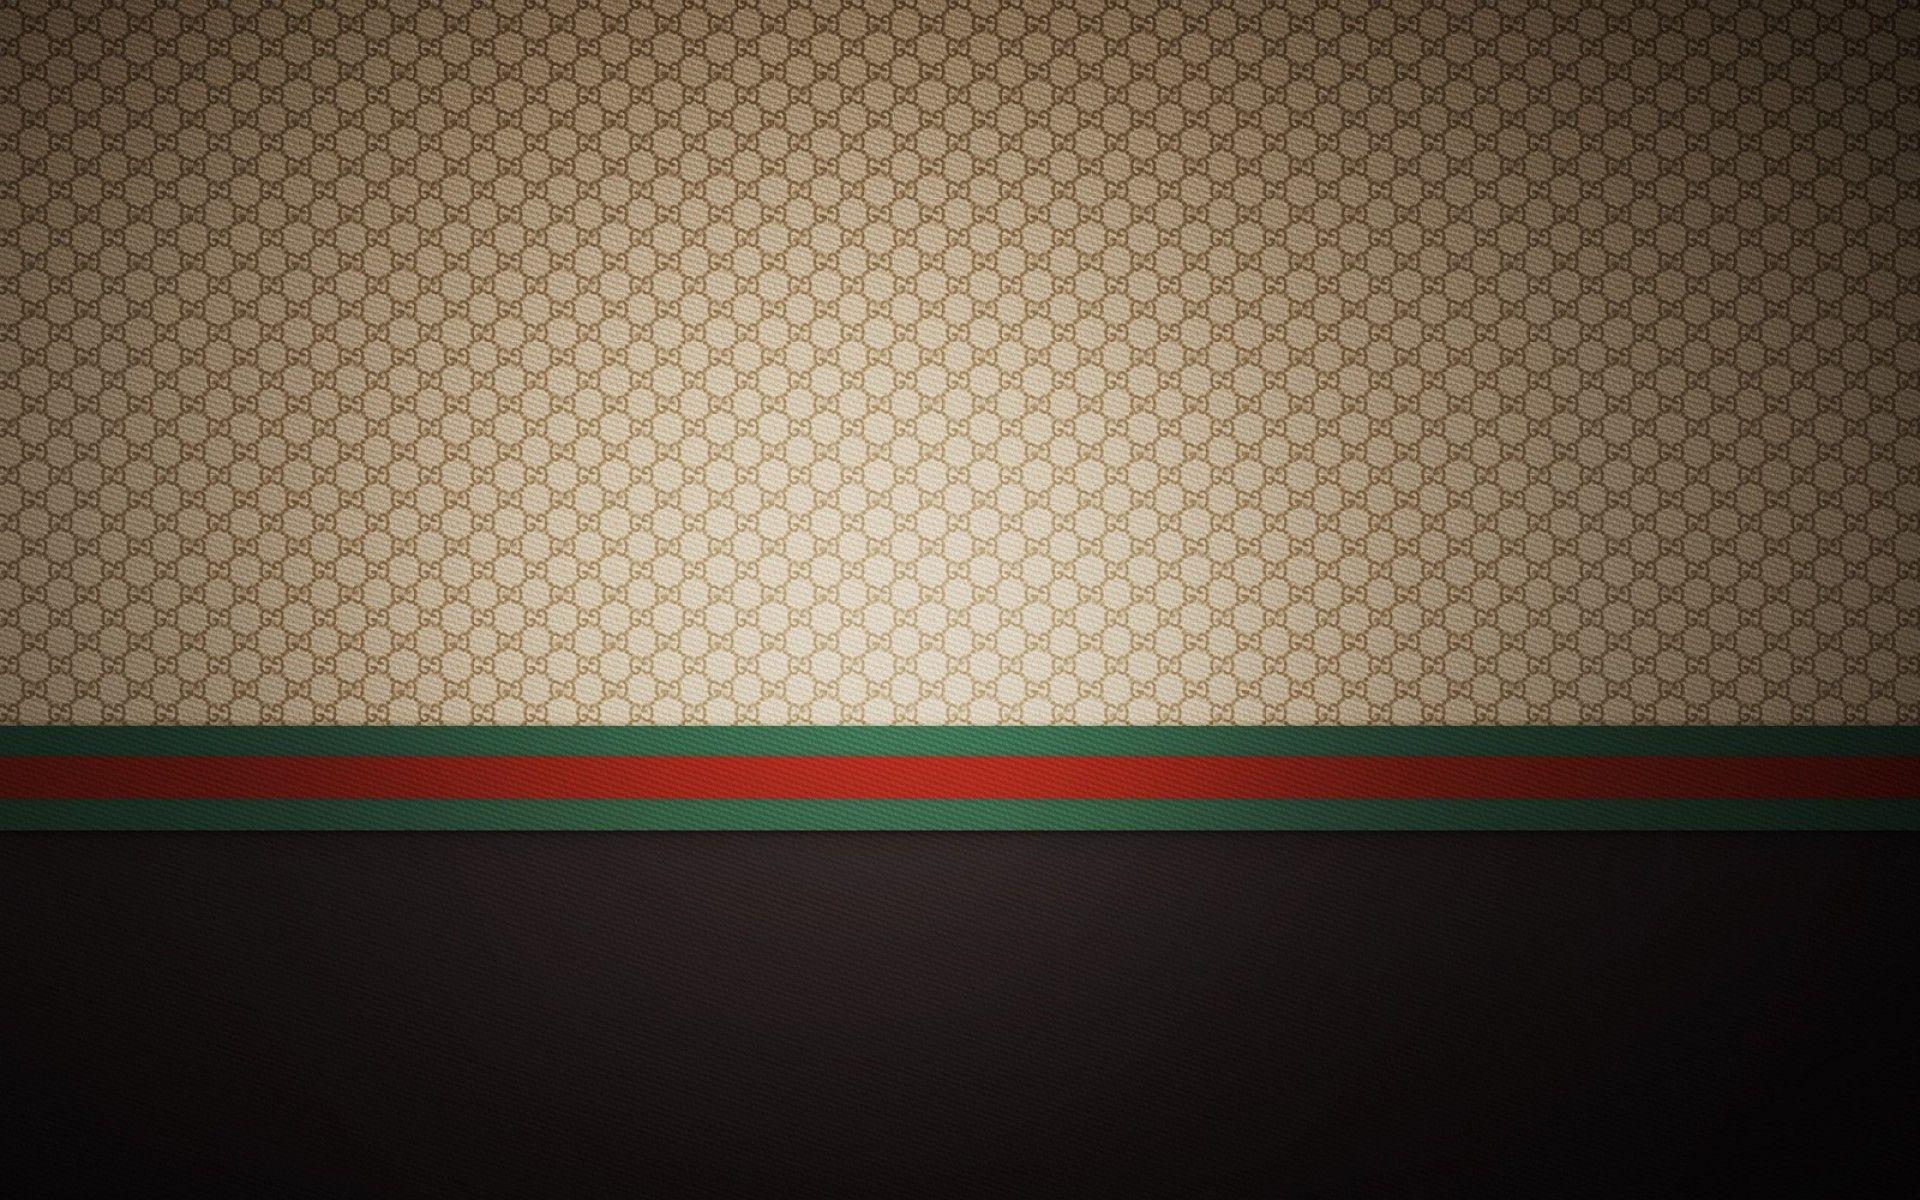 Gucci designer label patterns wall wallpaper HD. Wall